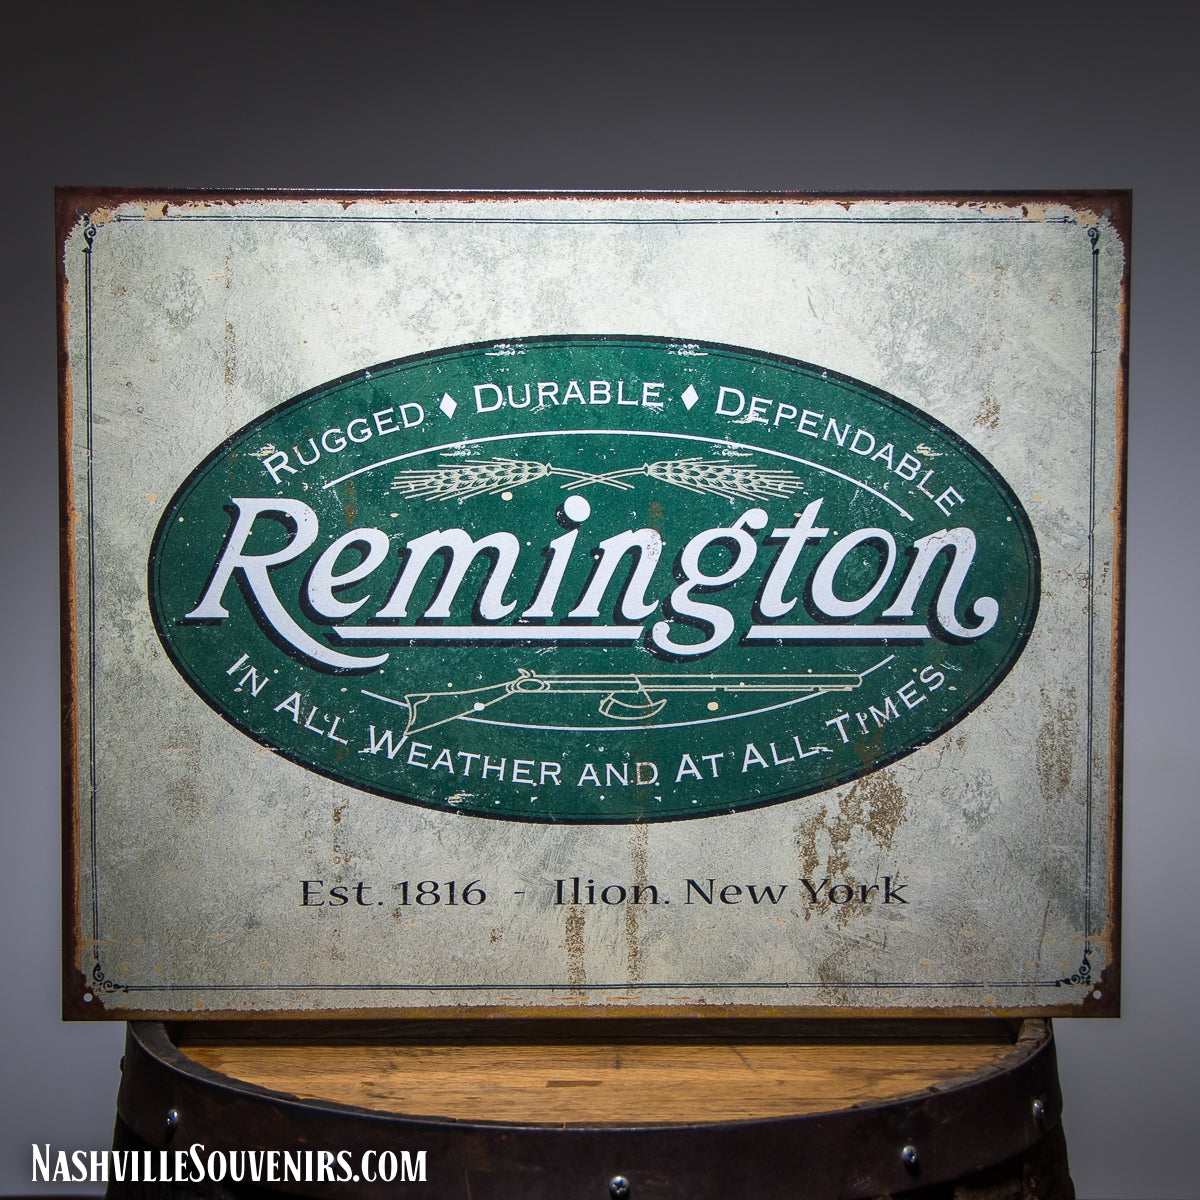 Remington Rugged Durable Dependable Tin Sign